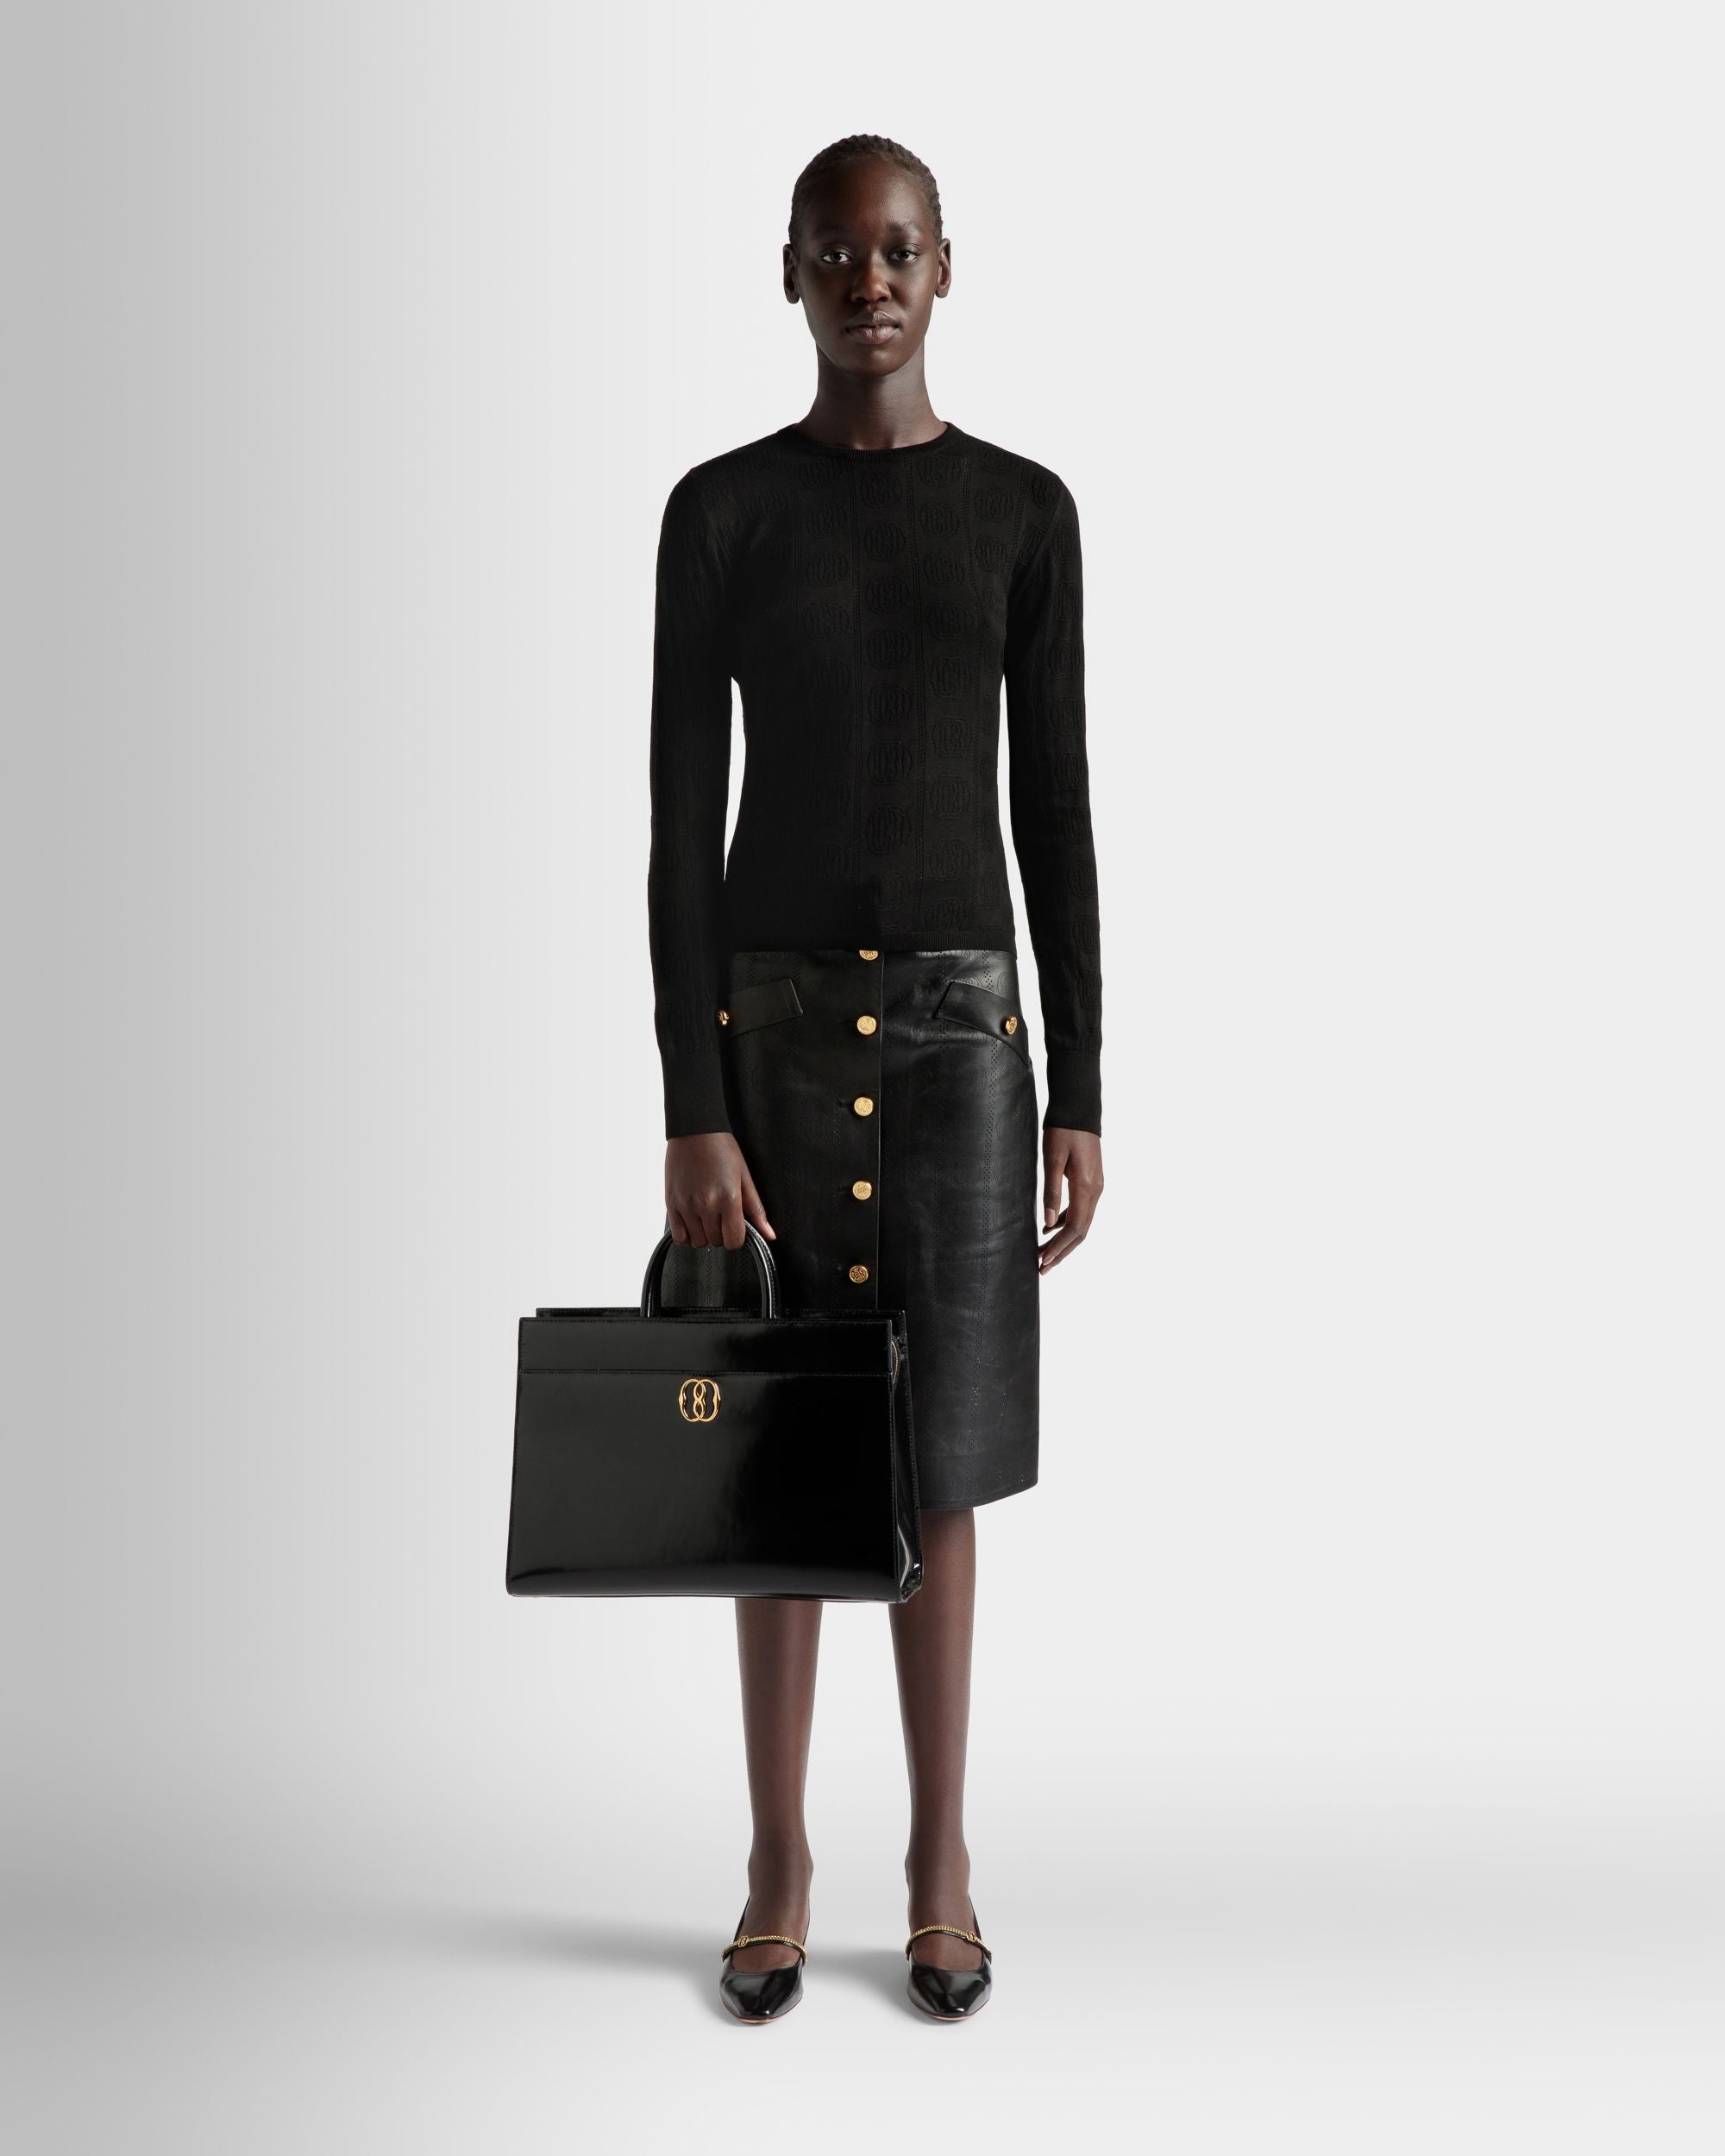 Emblem | Women's Tote Bag in Black Brushed Leather | Bally | On Model Front